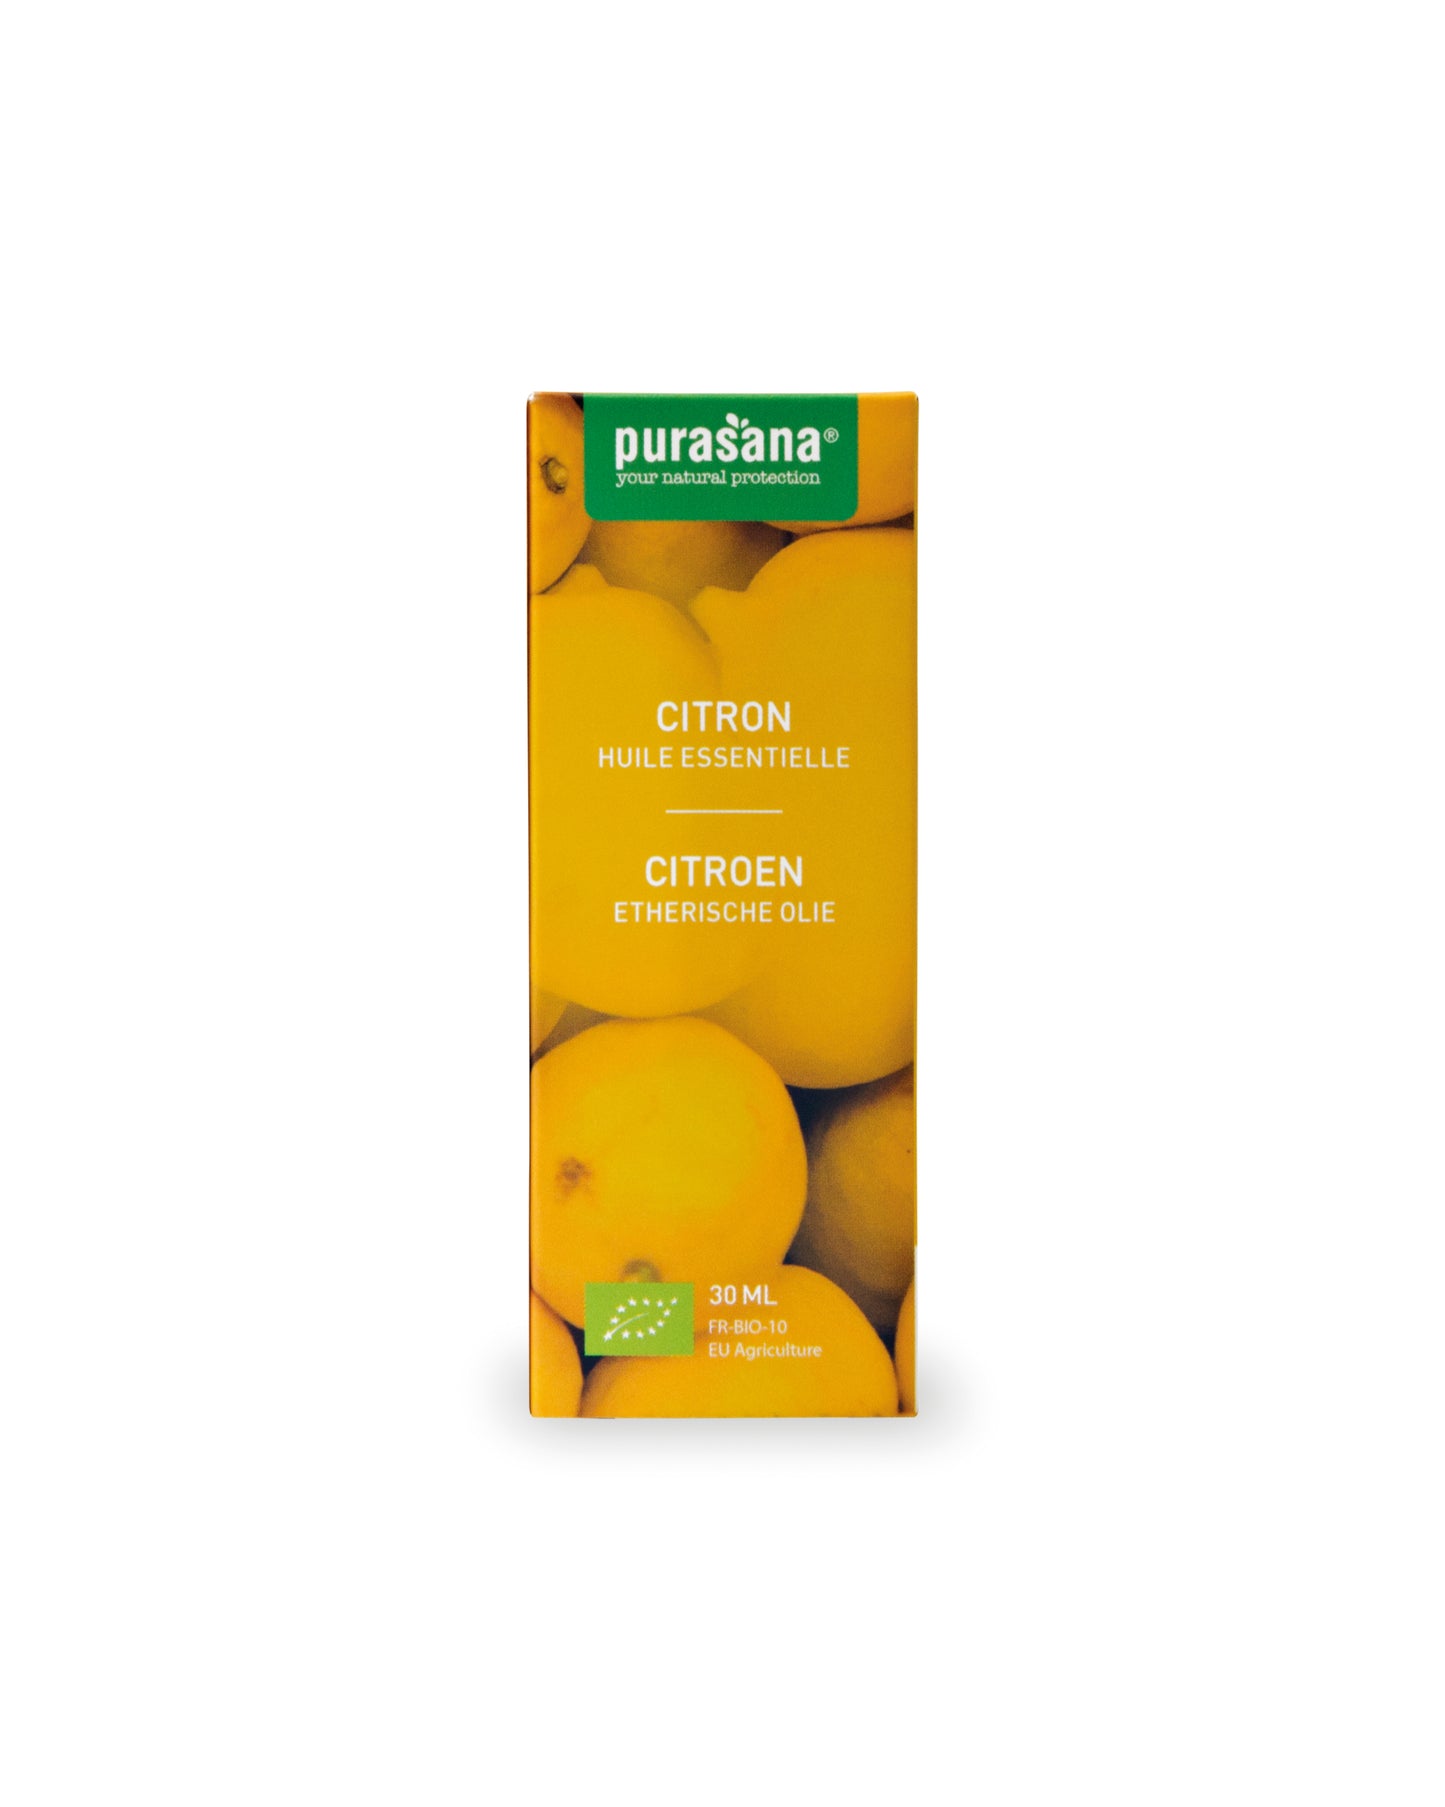 Purasana -- Huile essentielle citron - 30 ml